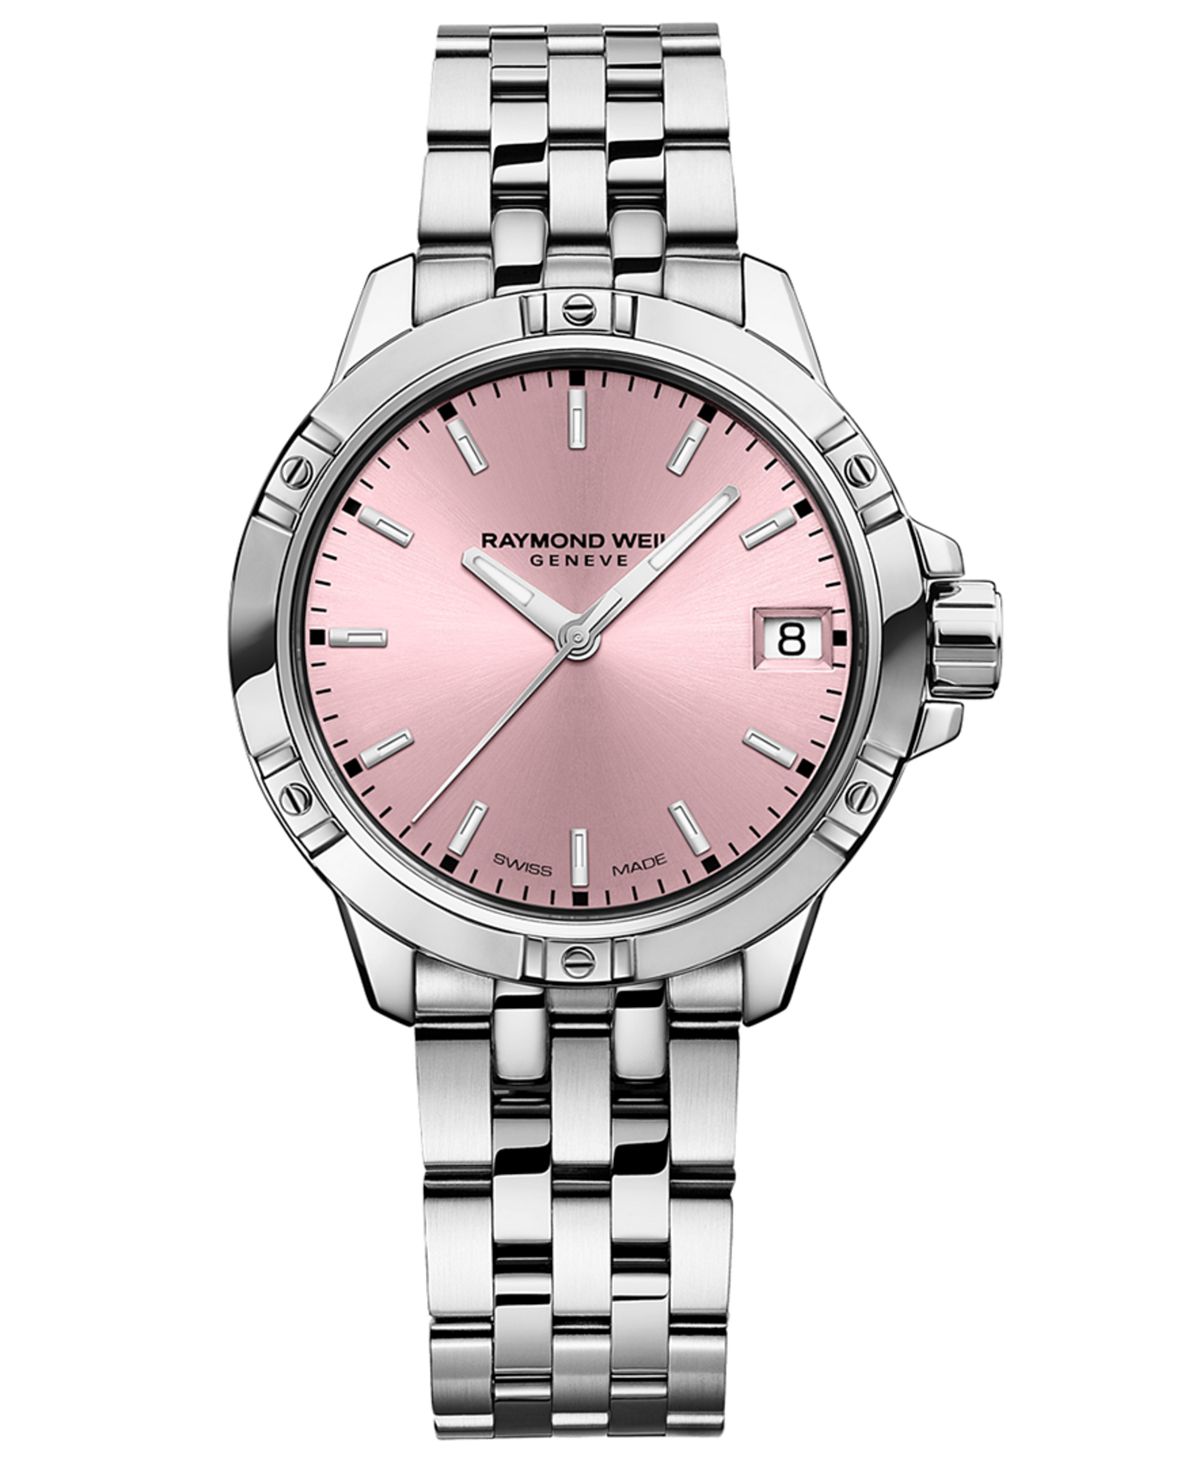 Raymond Weil Tango Classic 30mm Quartz Pink Dial Steel Date Watch (5960-ST-80001)
,Stainless Steel Bracelet, Pink Dial, Indexes, Stainless Steel Case